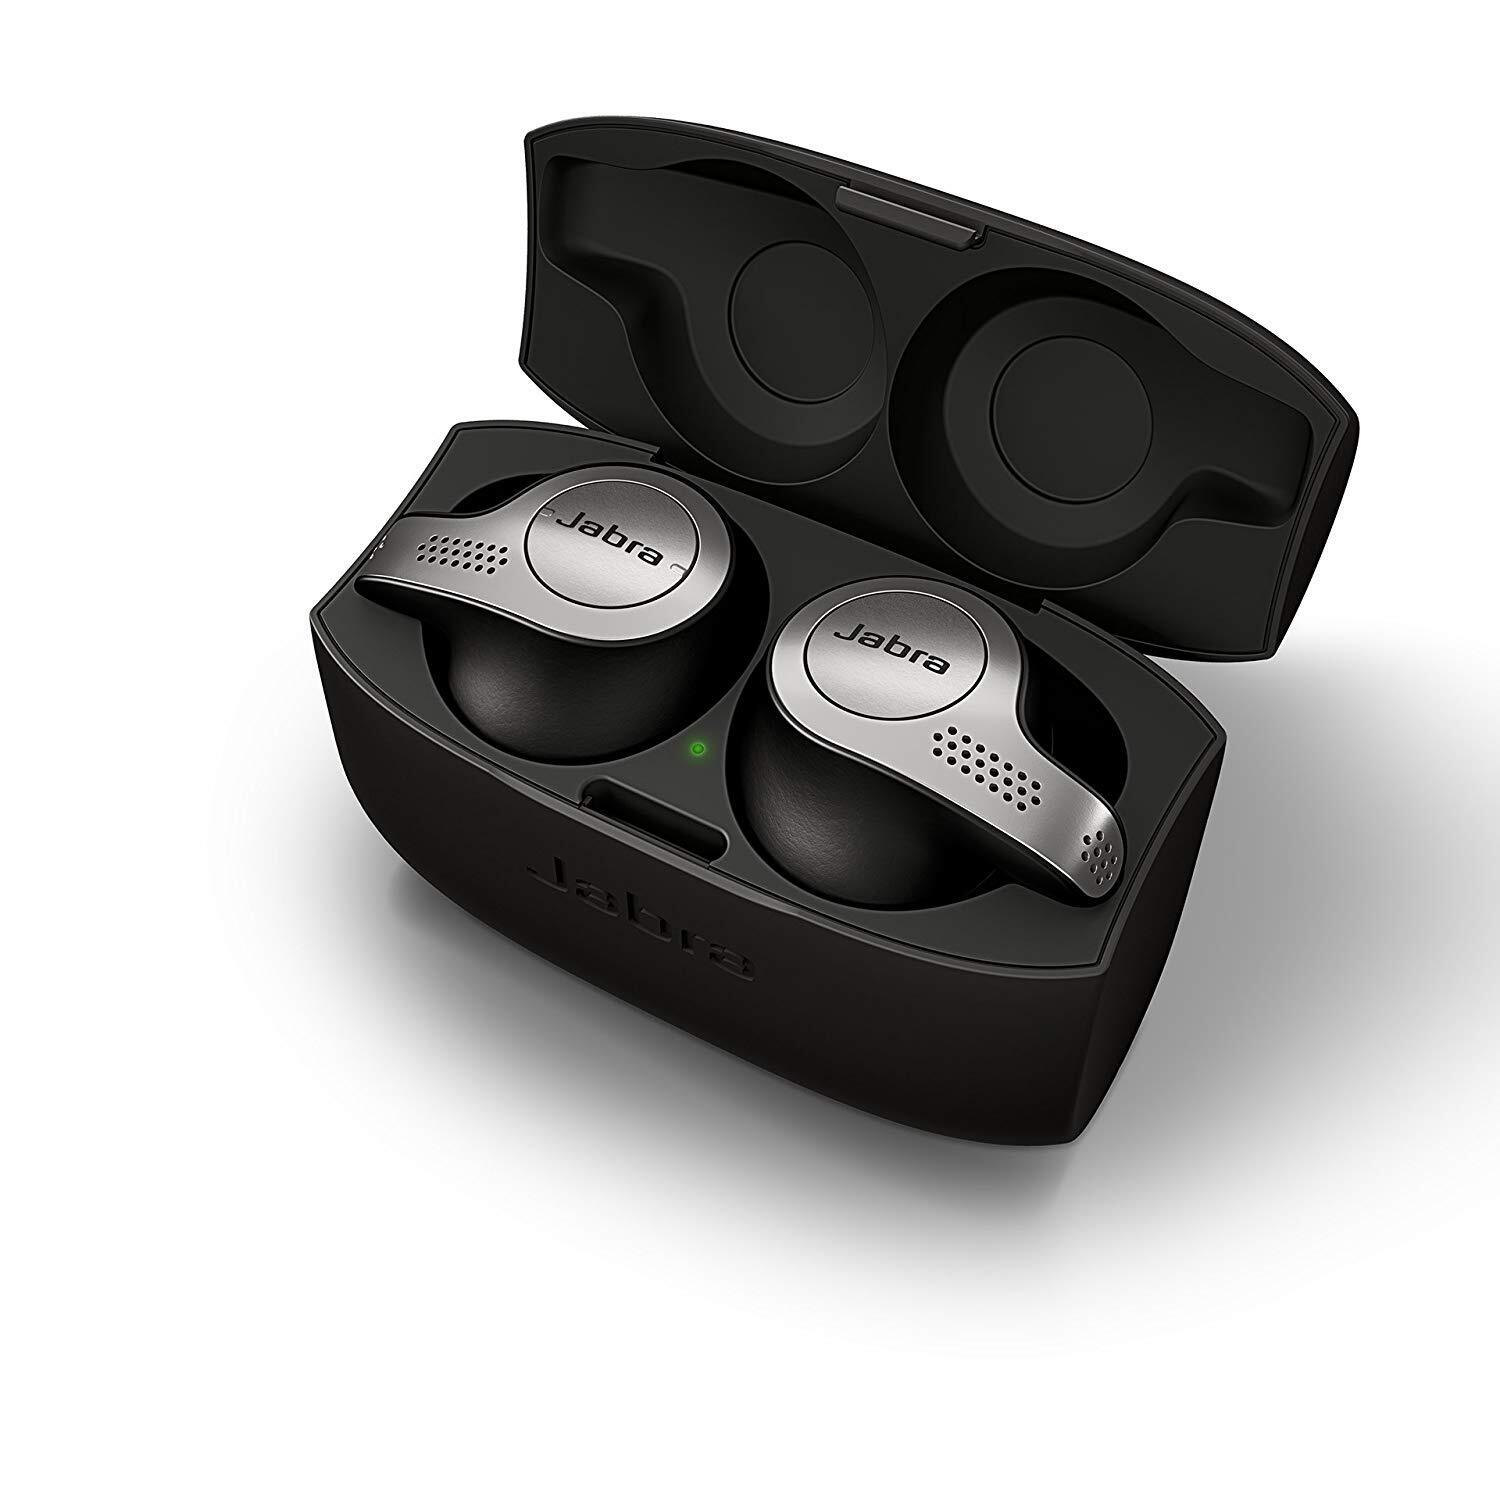 Jabra Elite 65t Alexa with True Wireless Bluetooth Earbud Charging Case - Titanium Black-M000000000426 www.mysocially.com